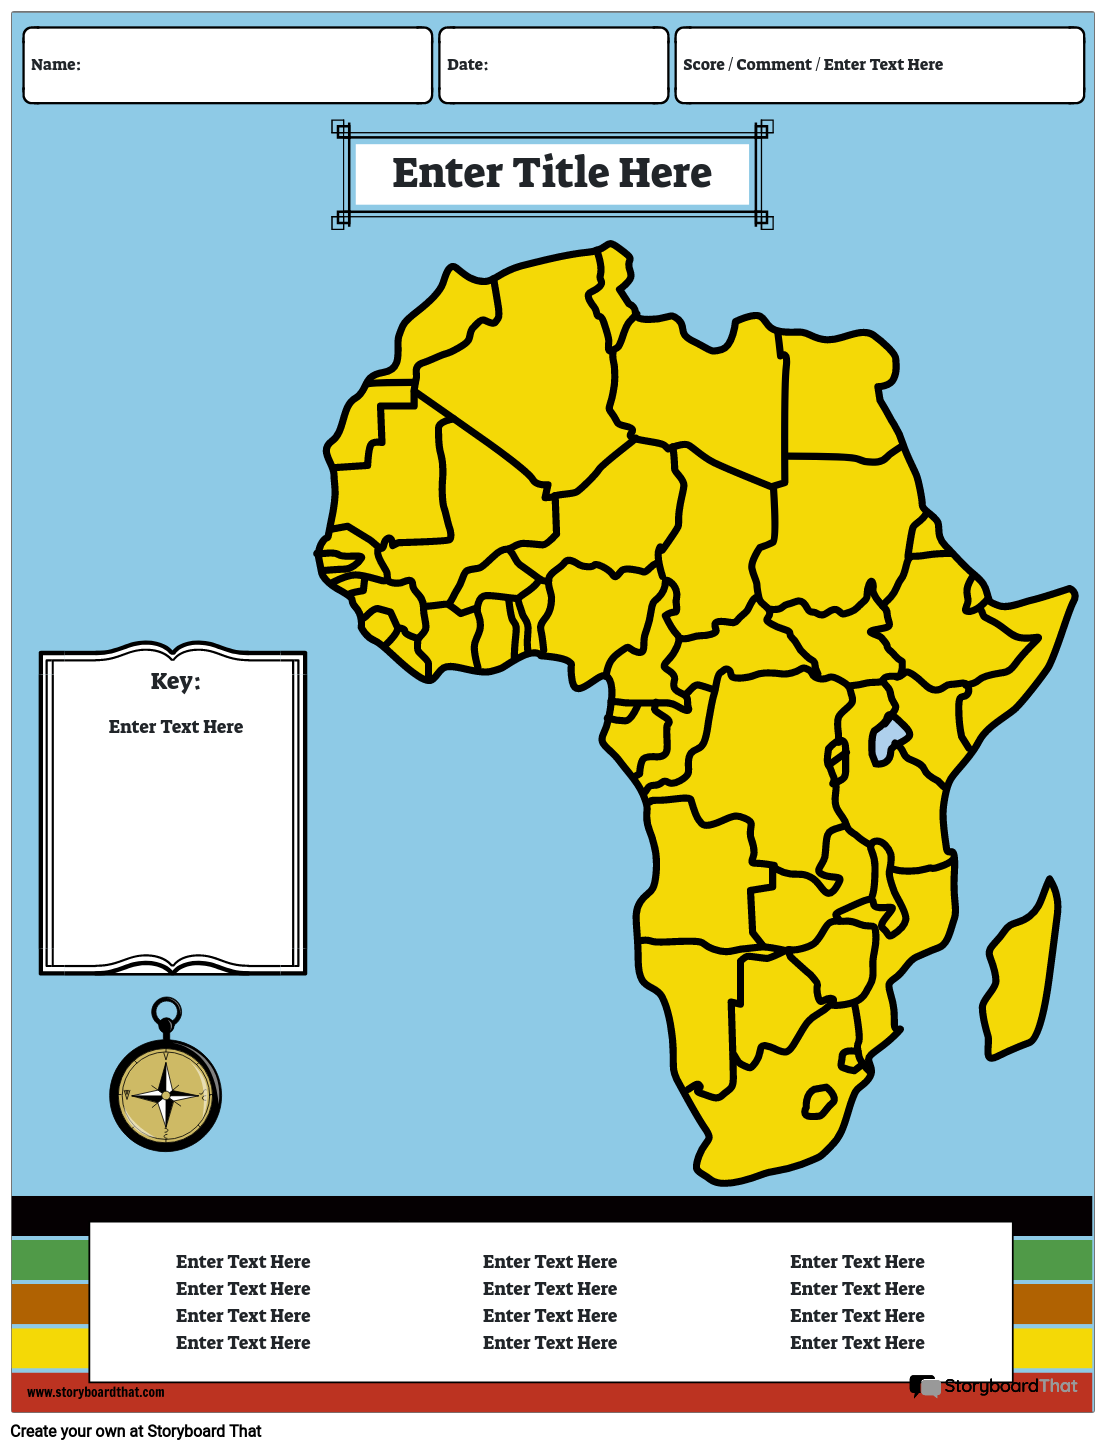 Afrika Kaart